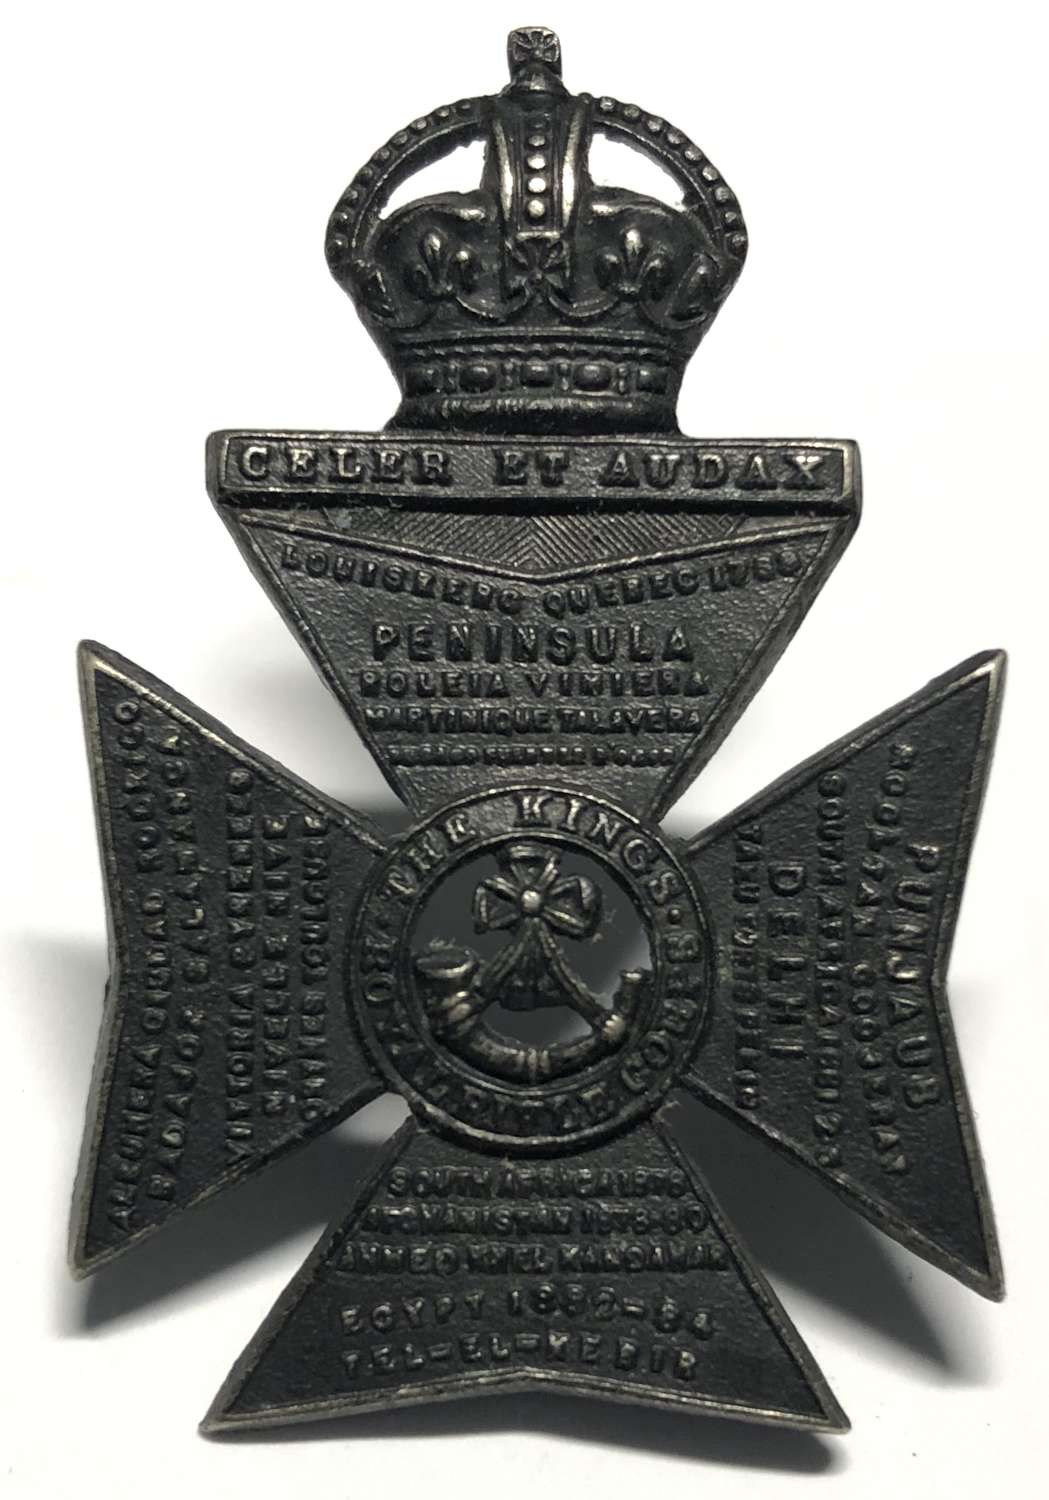 Kings Royal Rifle Corps Officer's Edwardian cap badge c1902-05